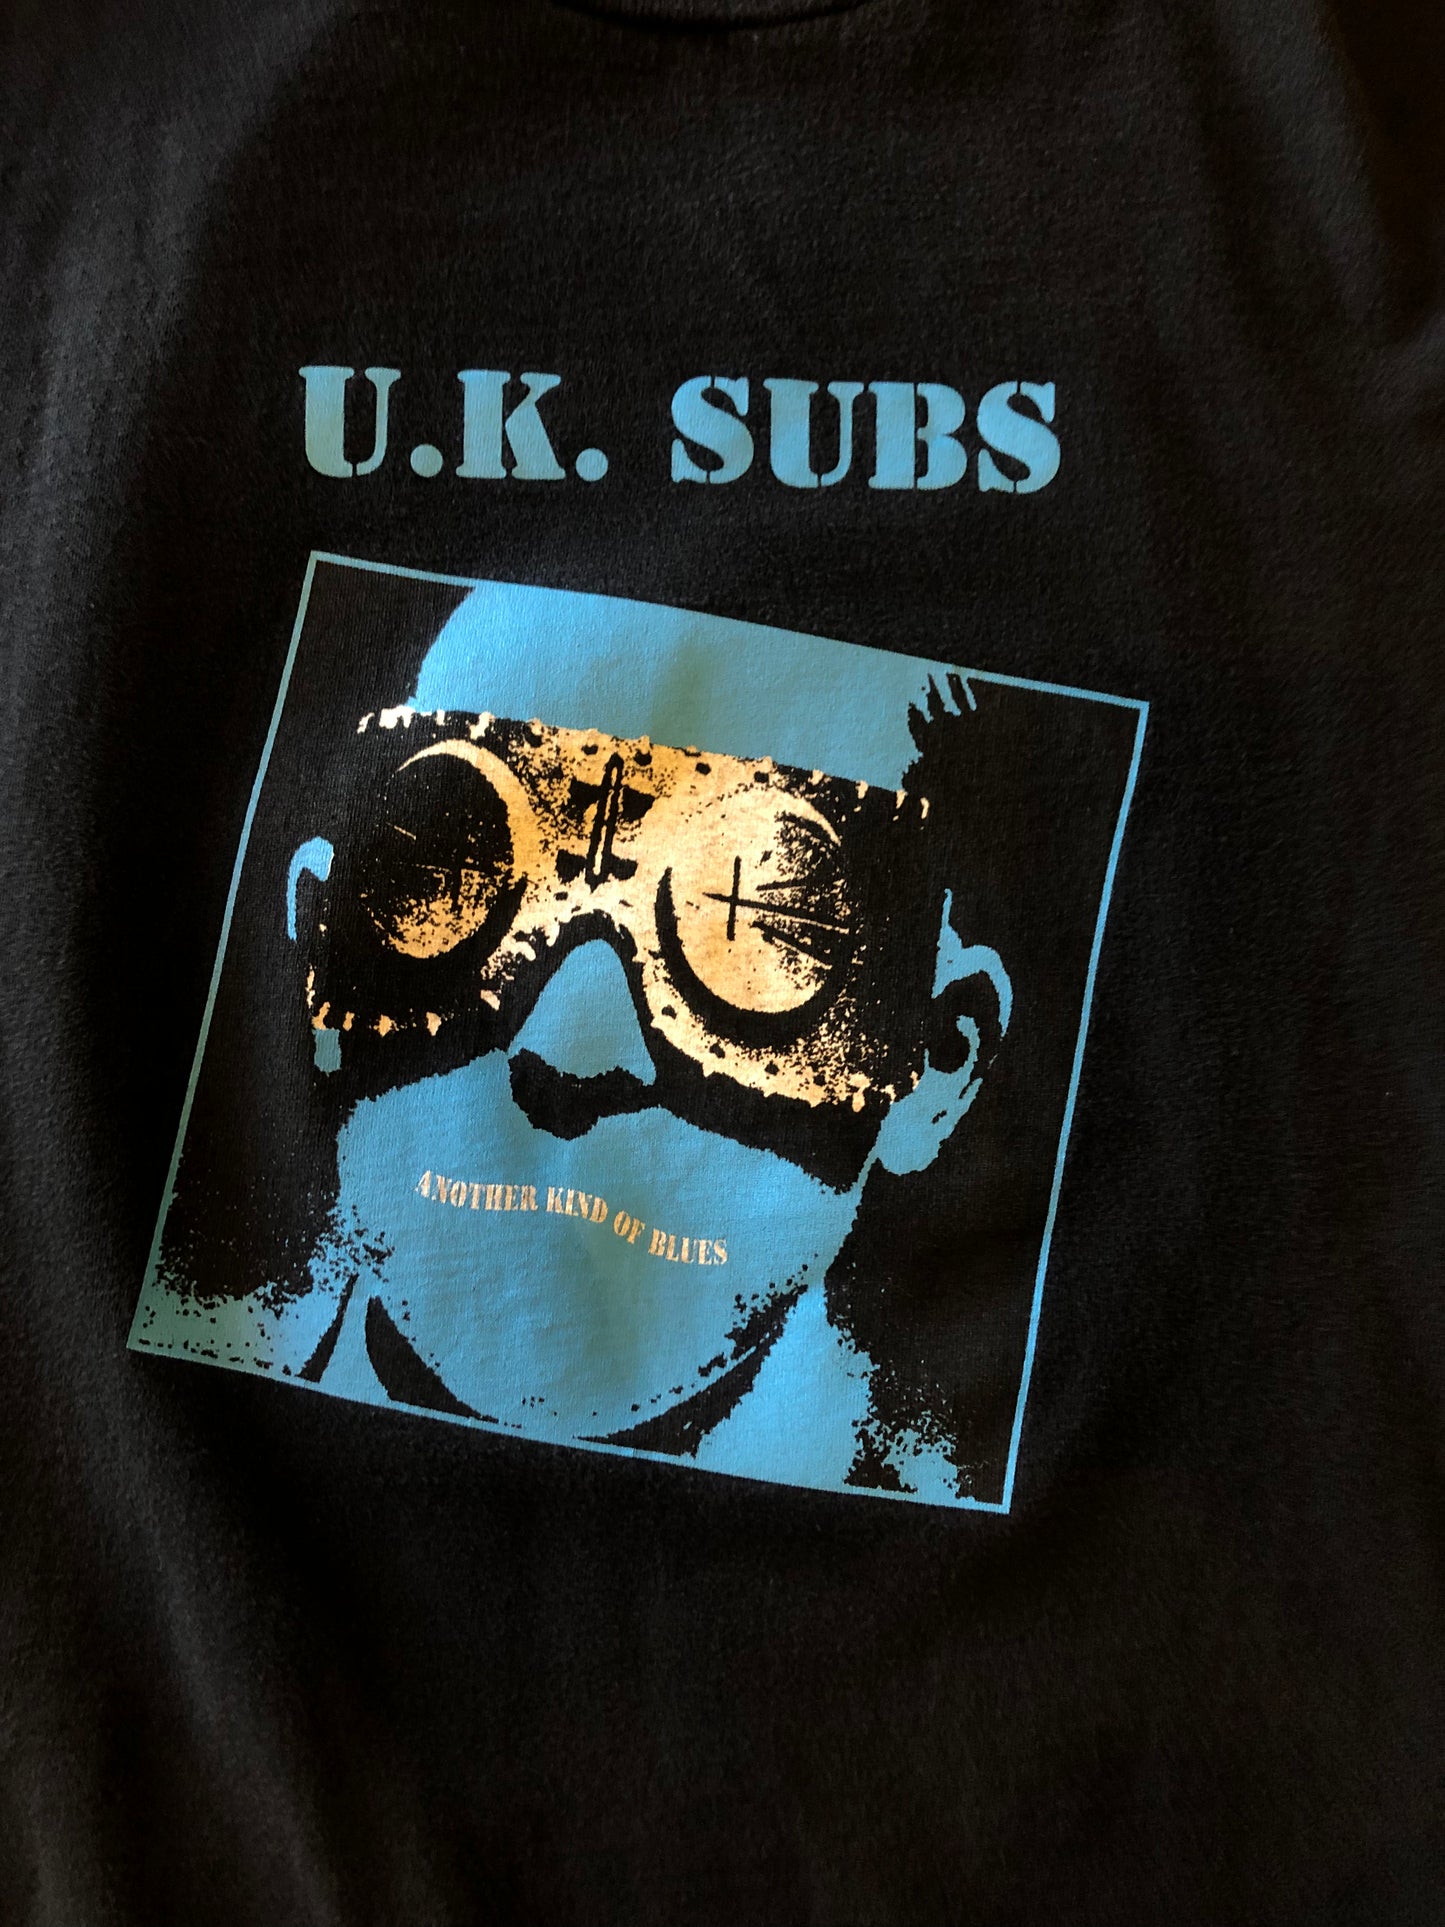 Vintage U.K. Subs “Another Kind o Blues” Album Cover T-Shirt